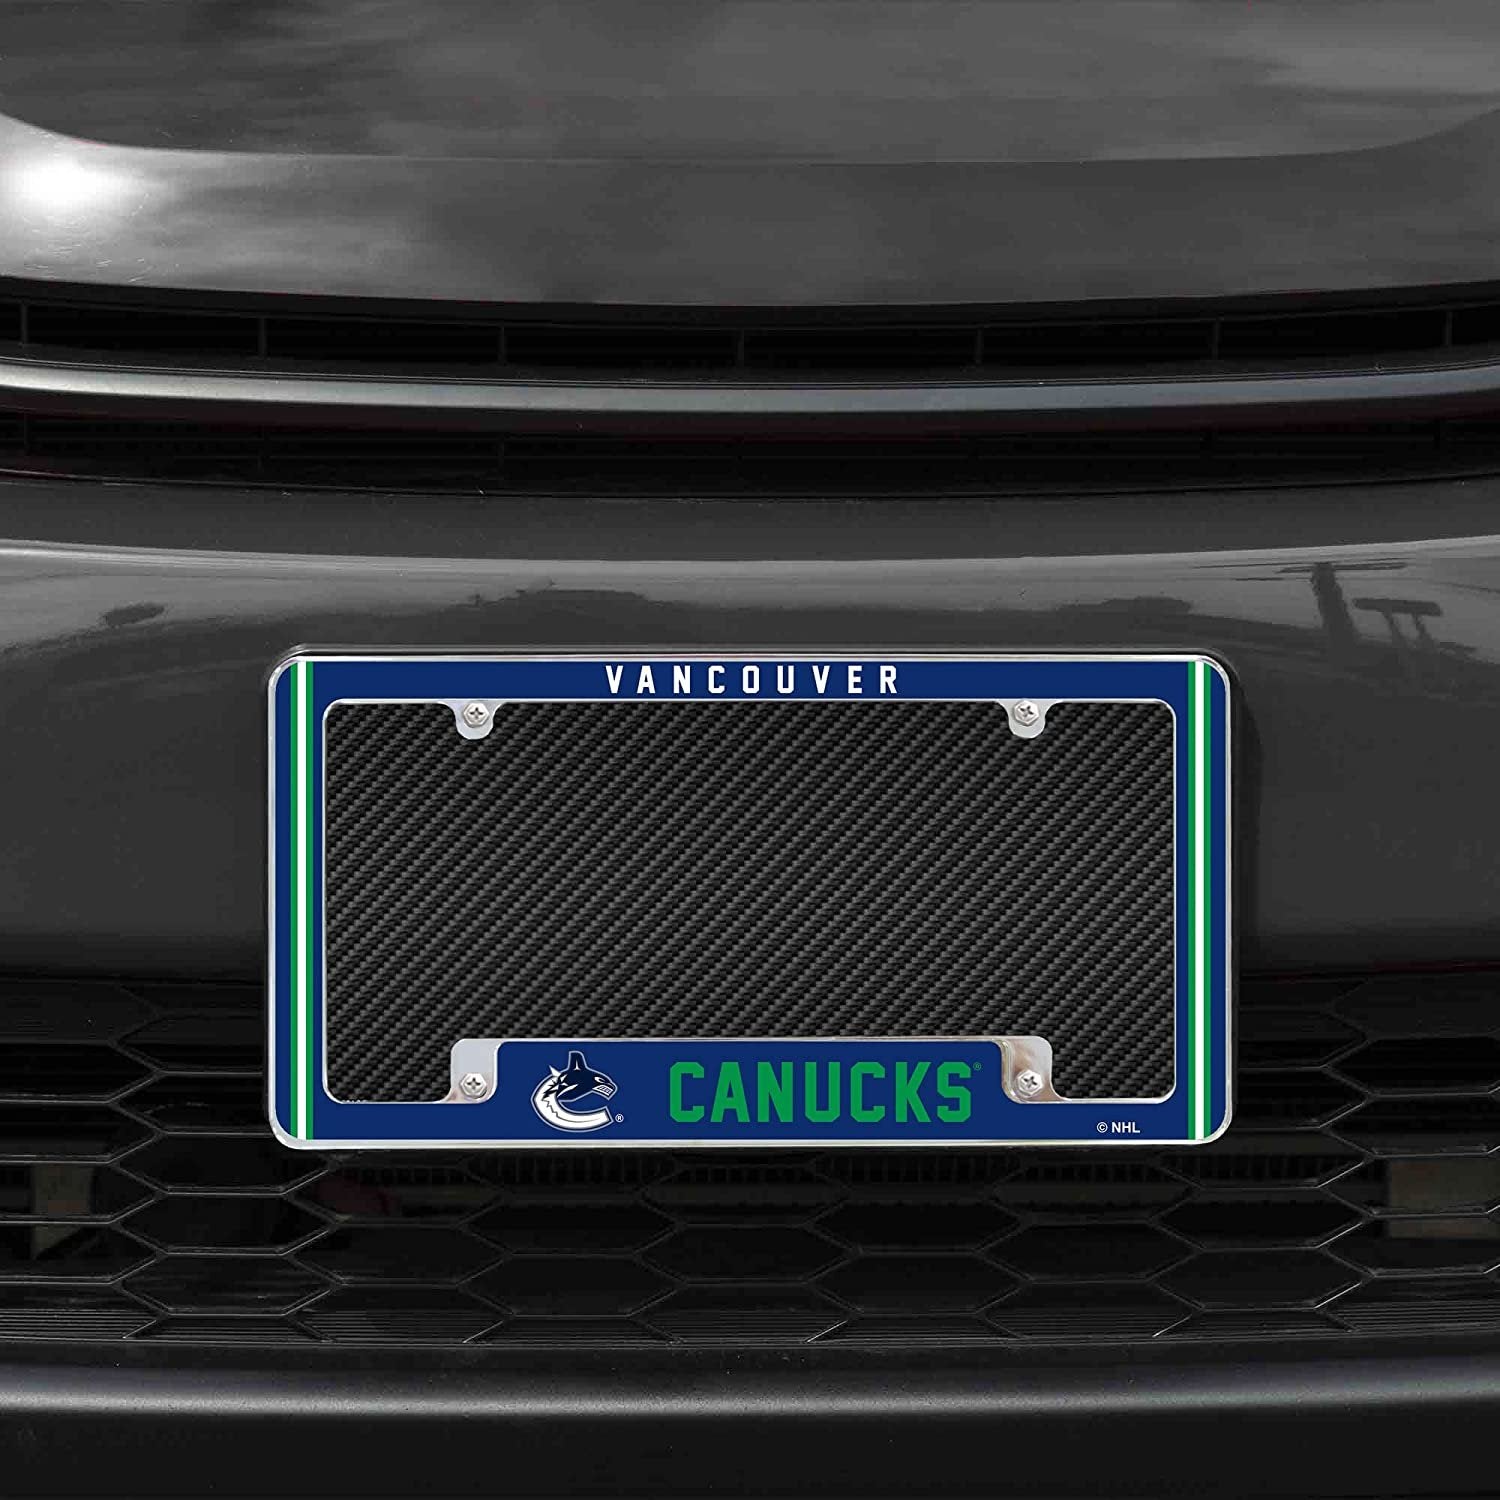 Vancouver Canucks Metal License Plate Frame Chrome Tag Cover Alternate Design 6x12 Inch